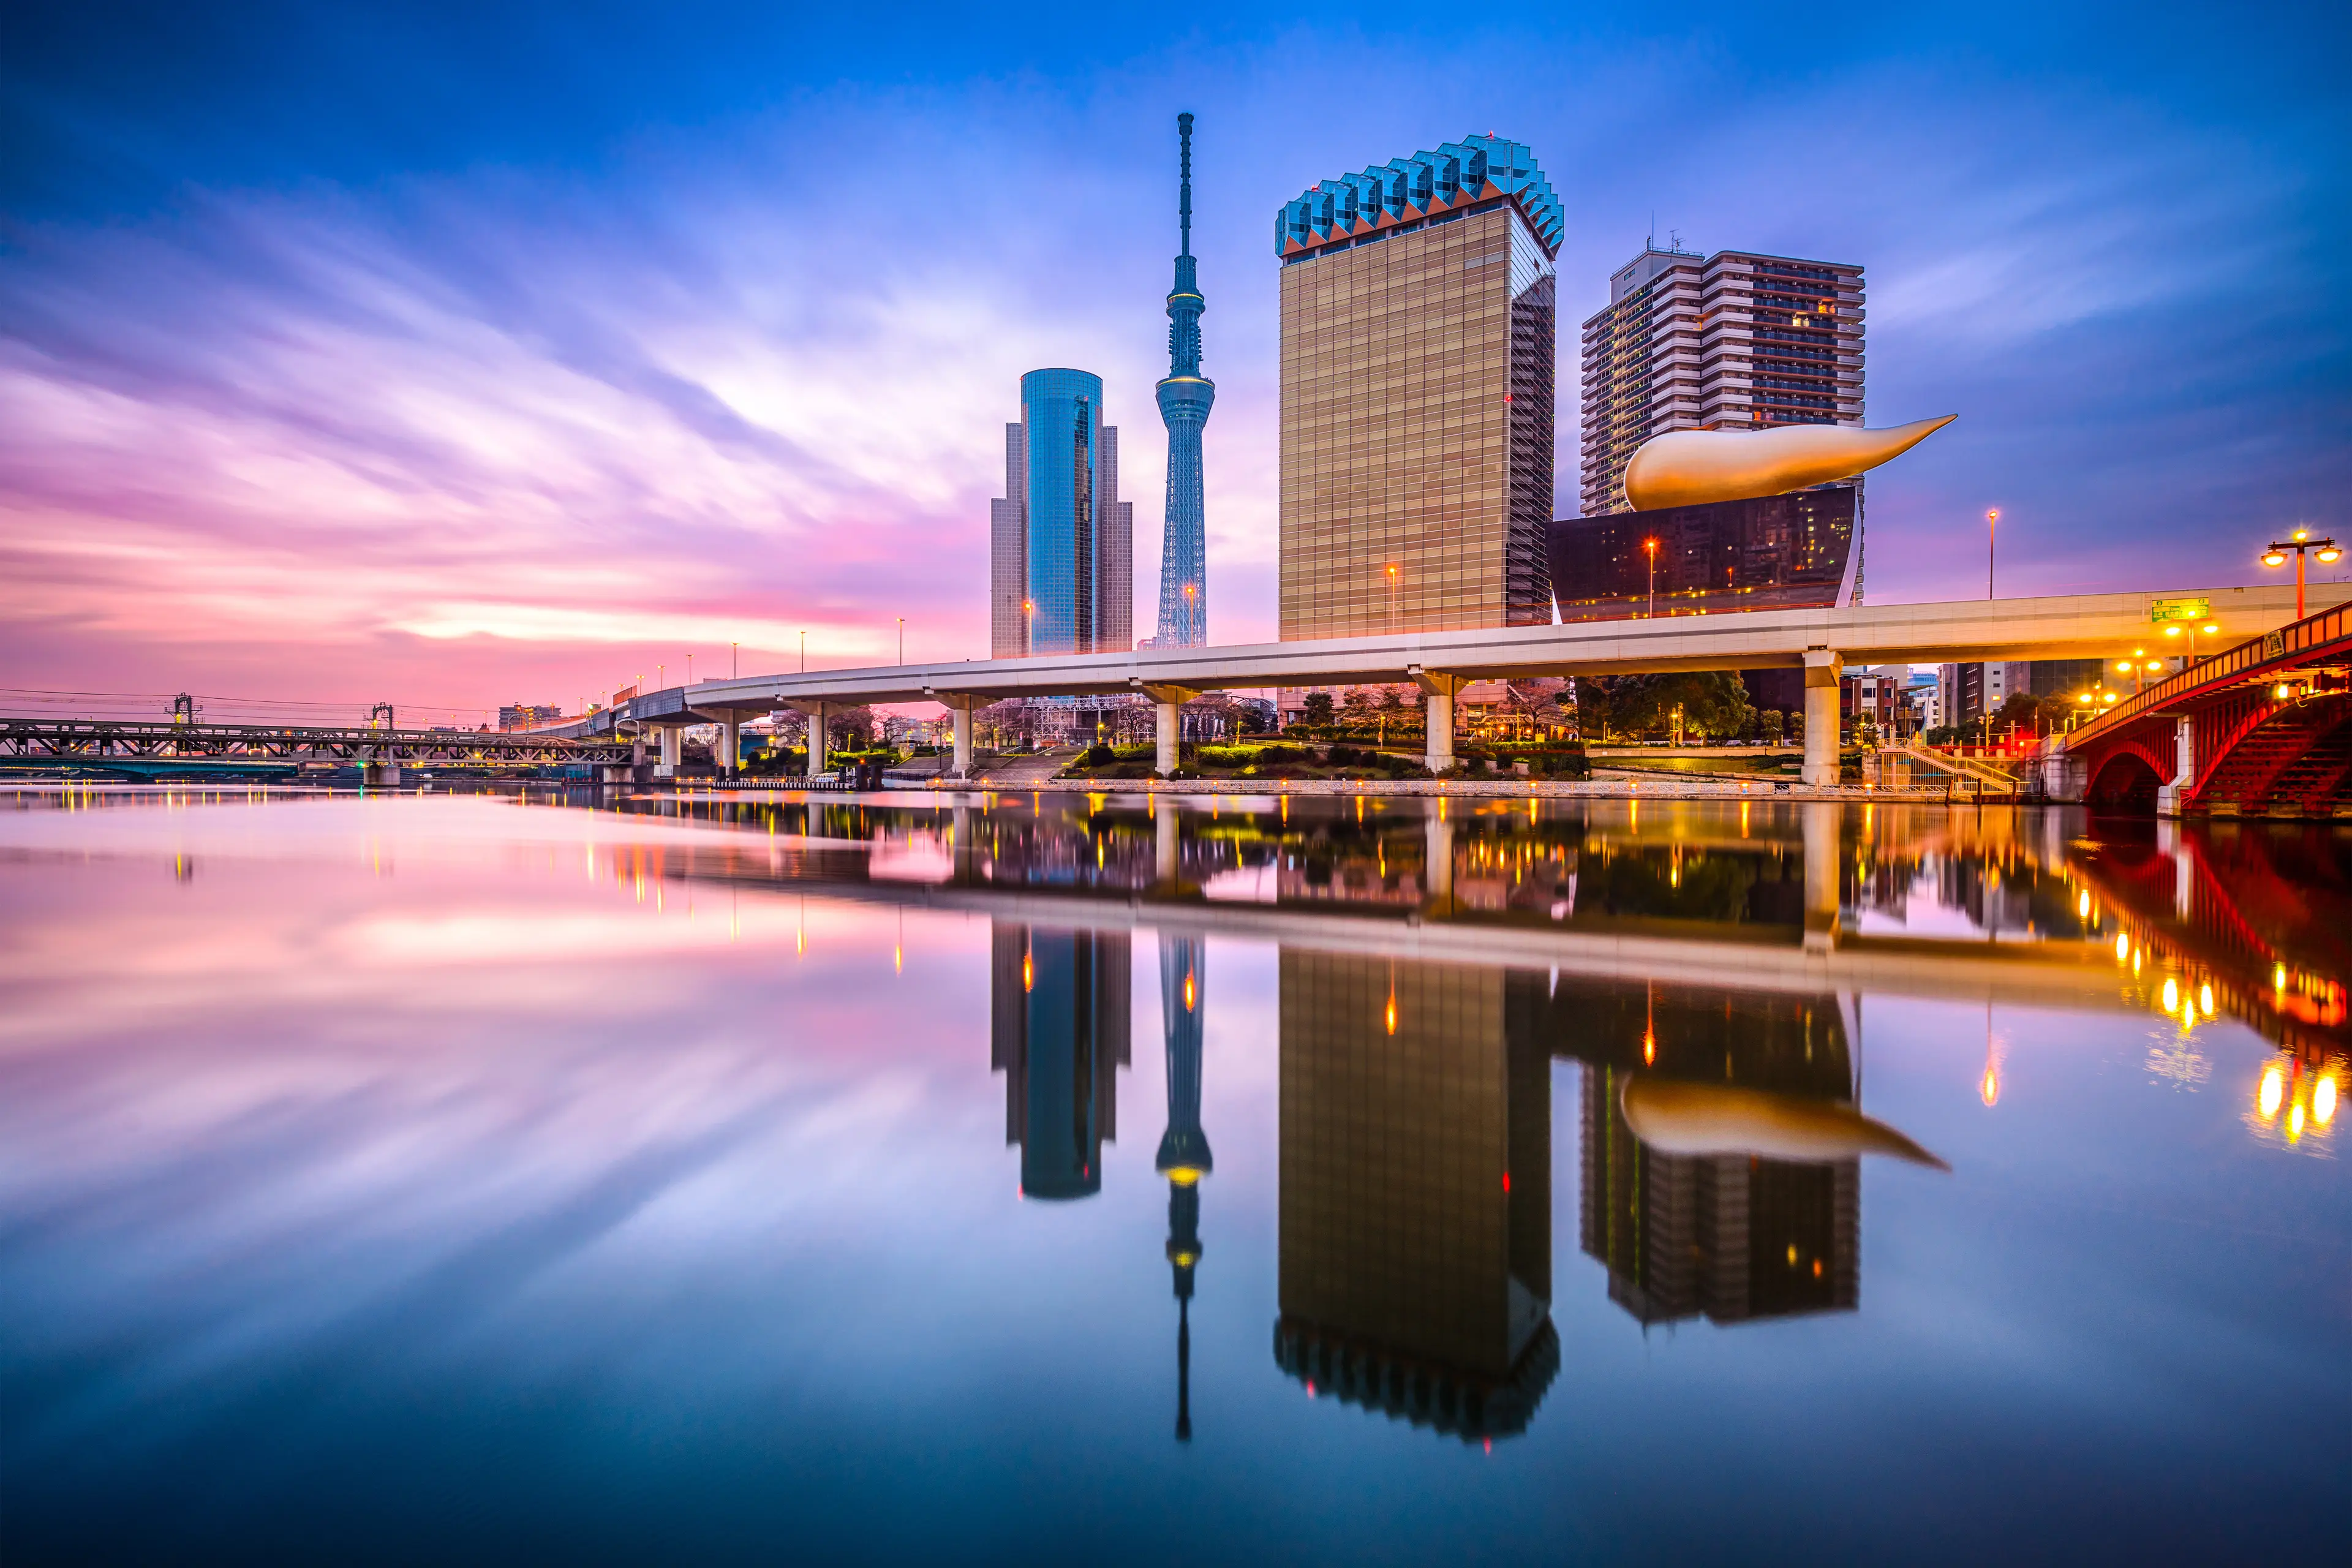 City skyline on the Sumida River